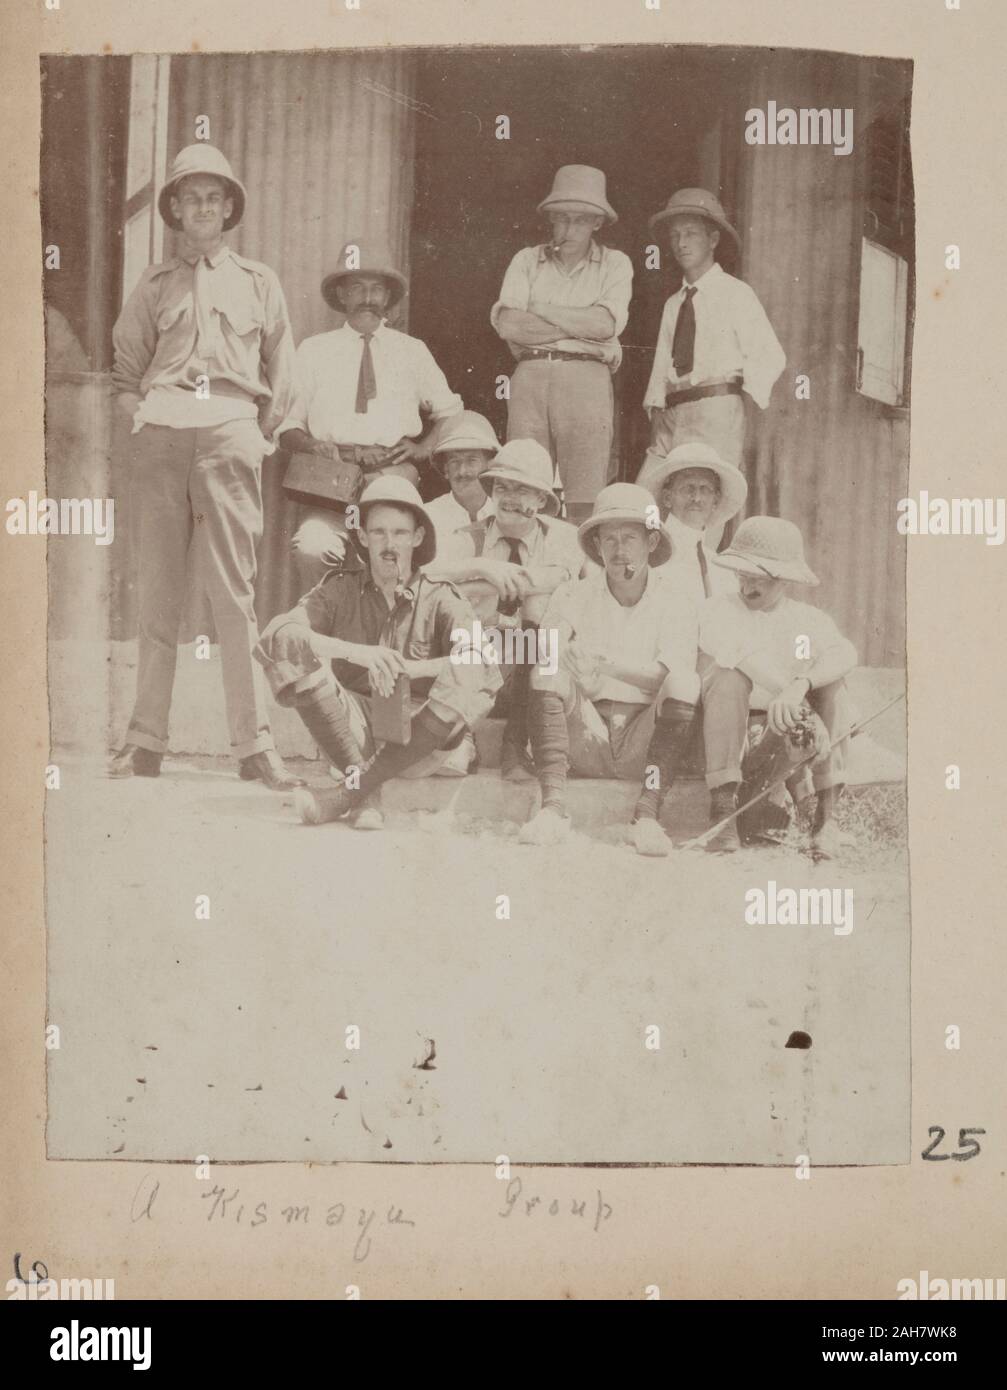 SomaliaJubaland, Eleven men in pith helmets posed for a group photographOriginal manuscript caption: Kismayu Group, circa 1910. 2005/078/1/25. Stock Photo